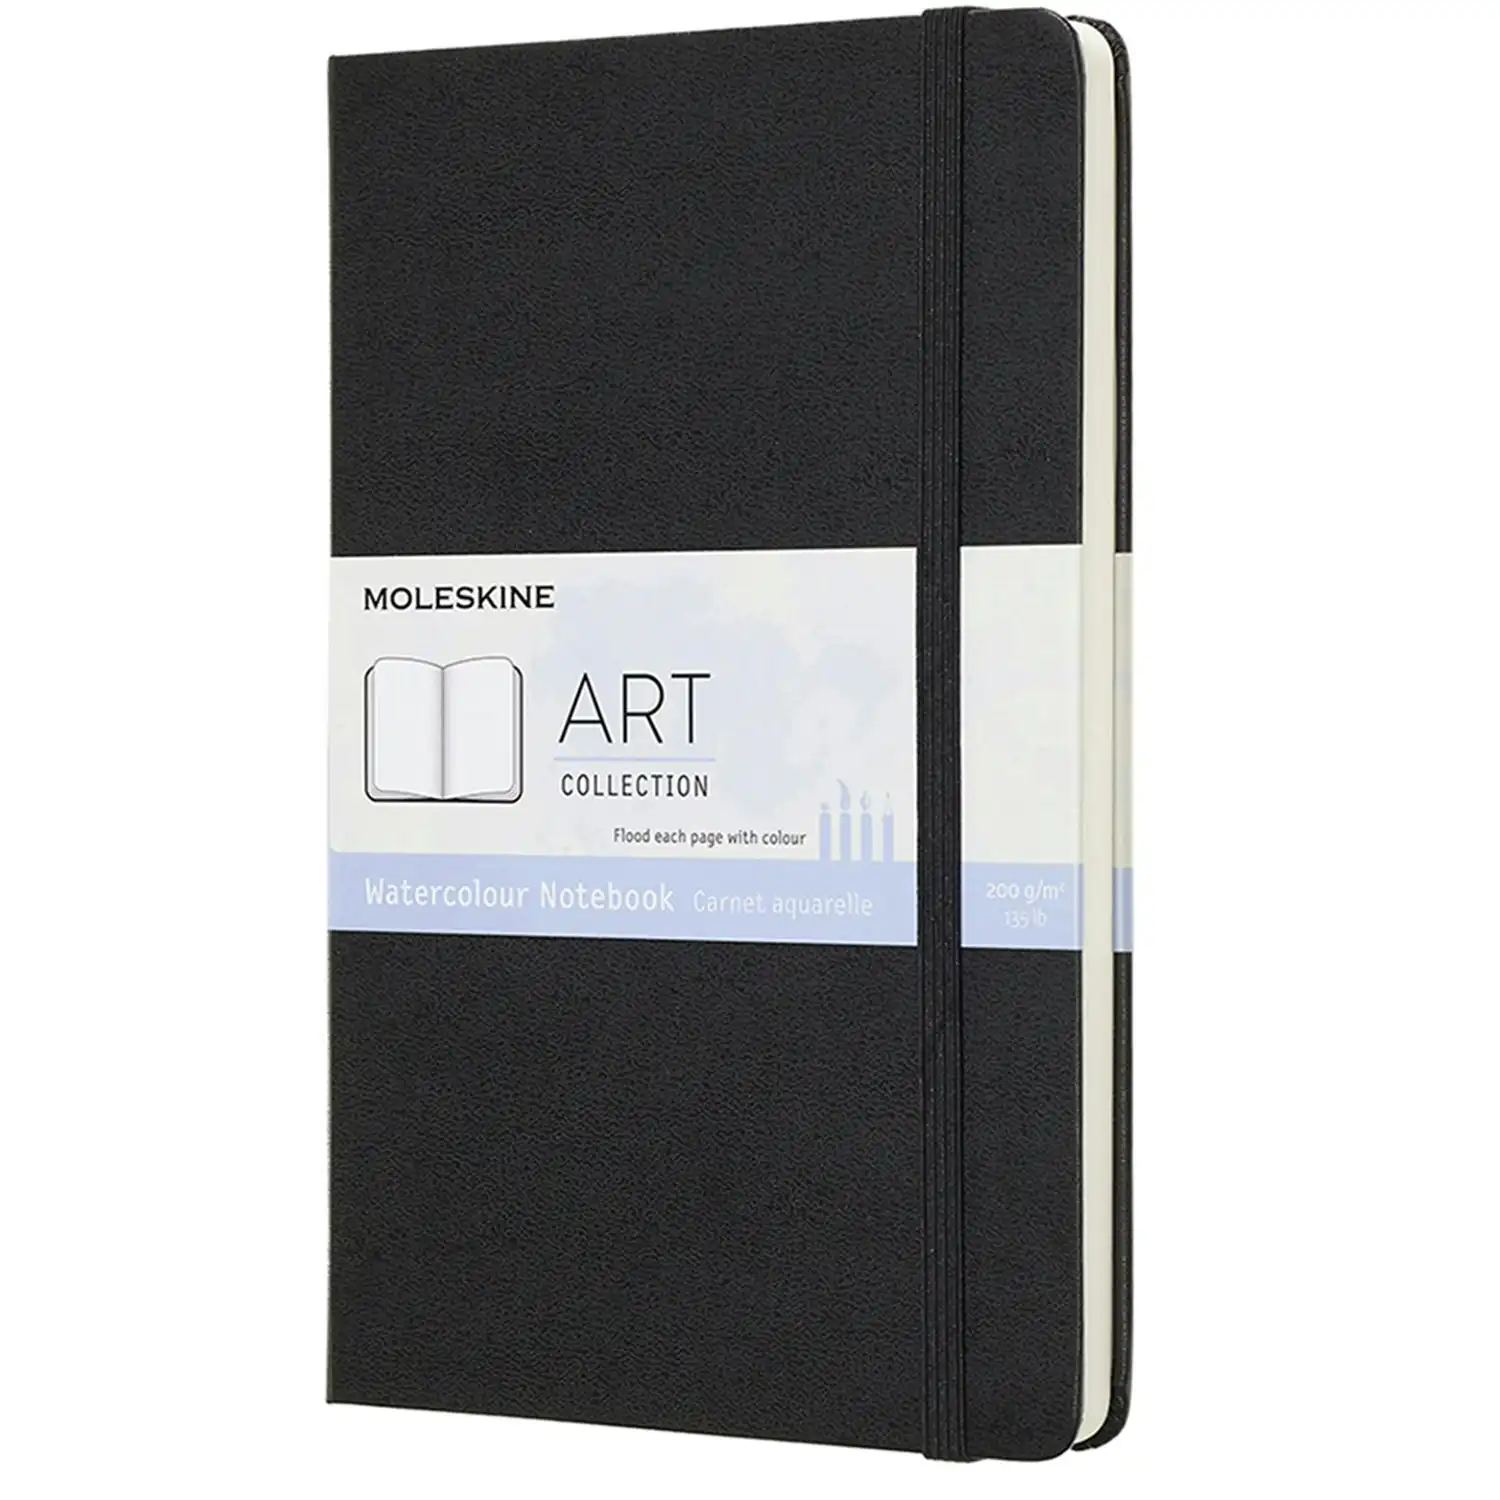 Moleskine Art 200gsm Thread Bound Watercolour Notebook Draw/Sketch Paper L Black